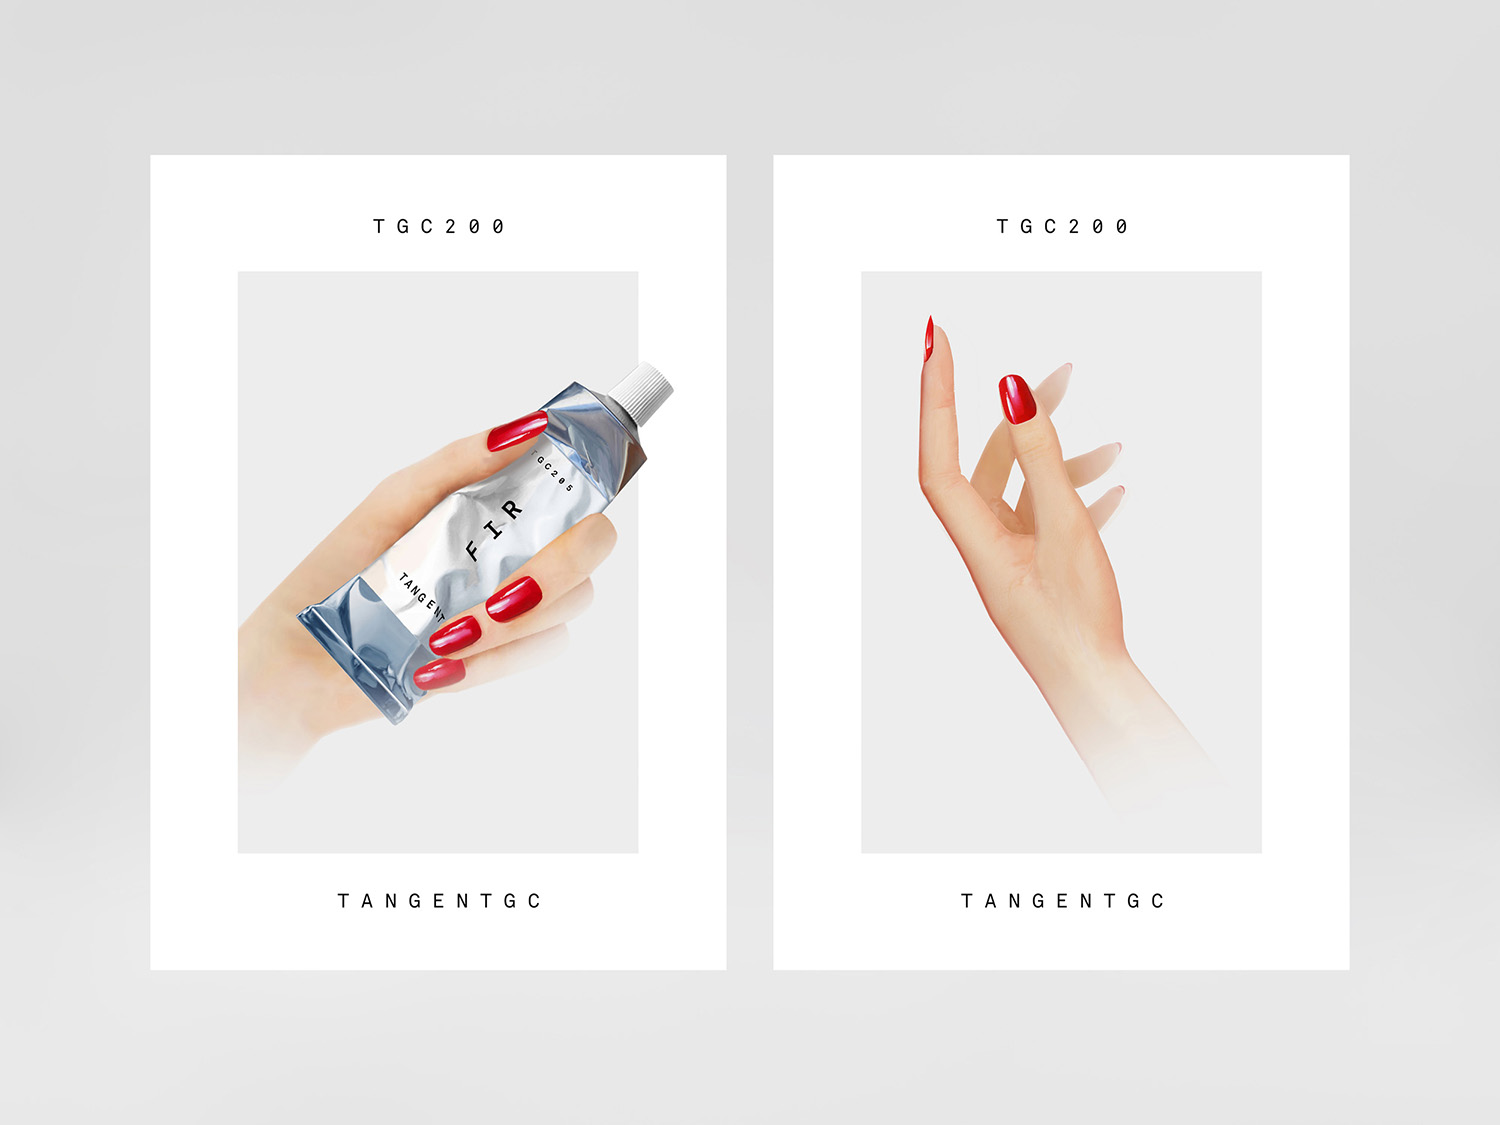 Illustration in Branding – Tangent GC Hand Cream by Carl Nas Associates, UK